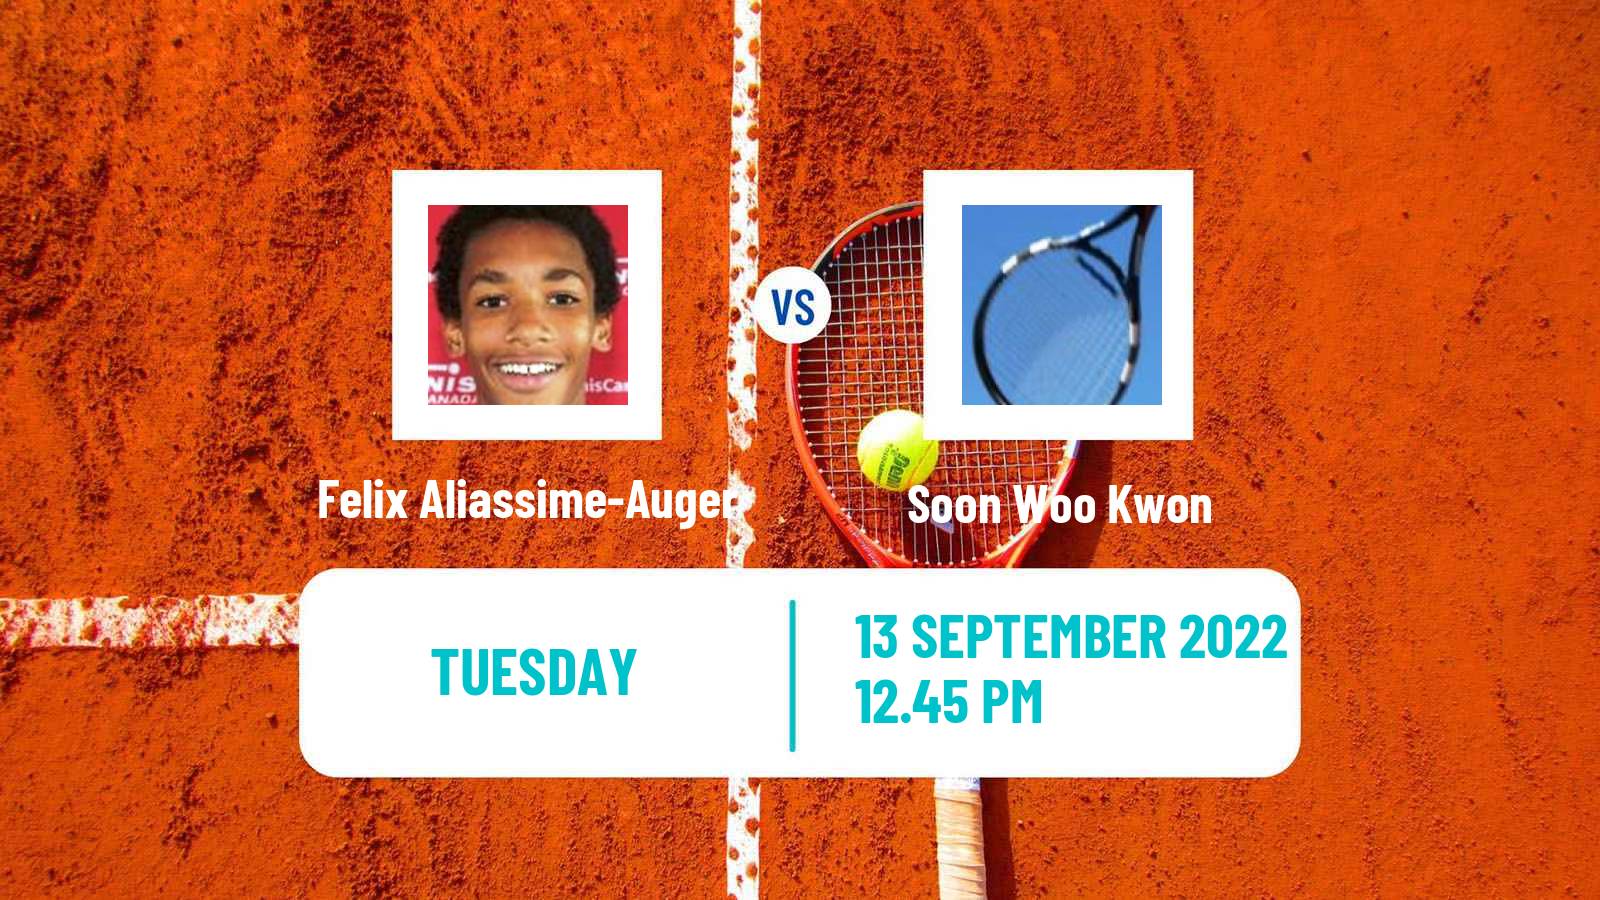 Tennis Davis Cup World Group Felix Aliassime-Auger - Soon Woo Kwon